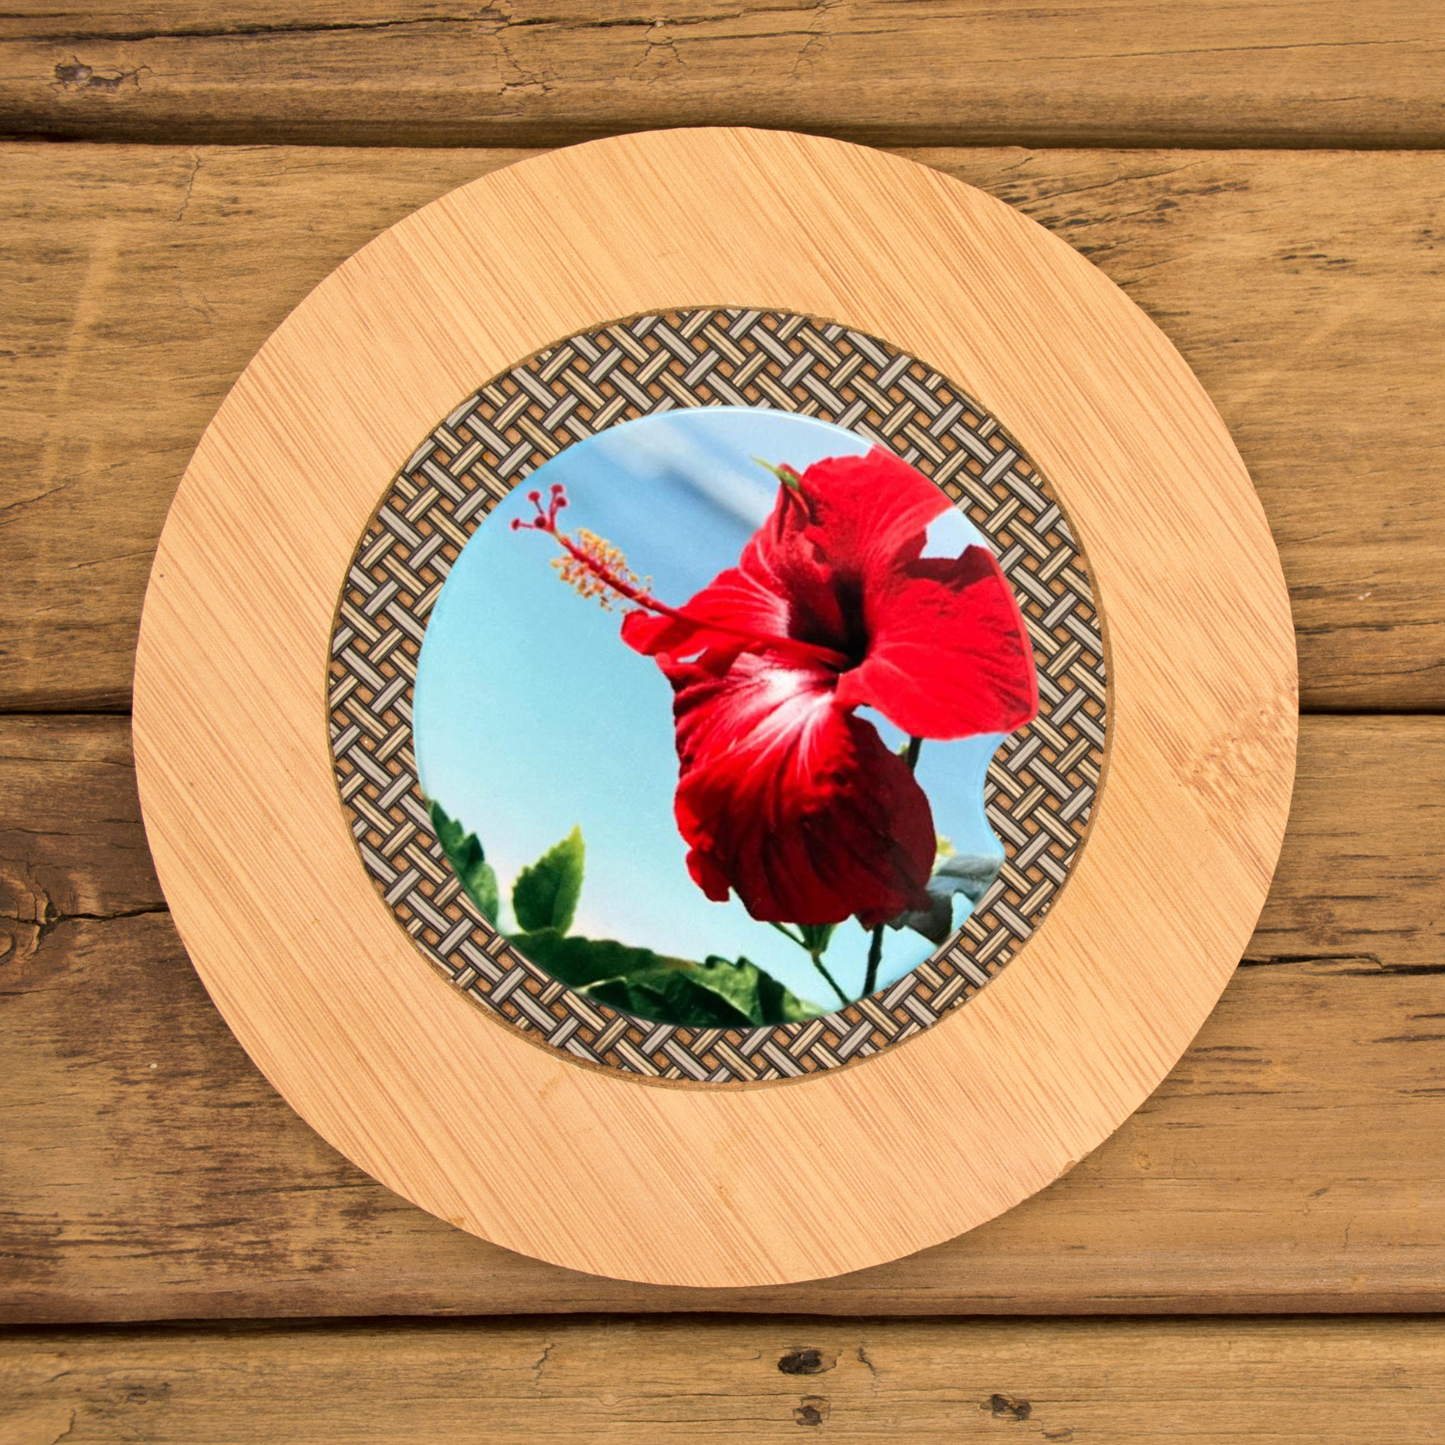 Car Coasters - Hibiscus Flower